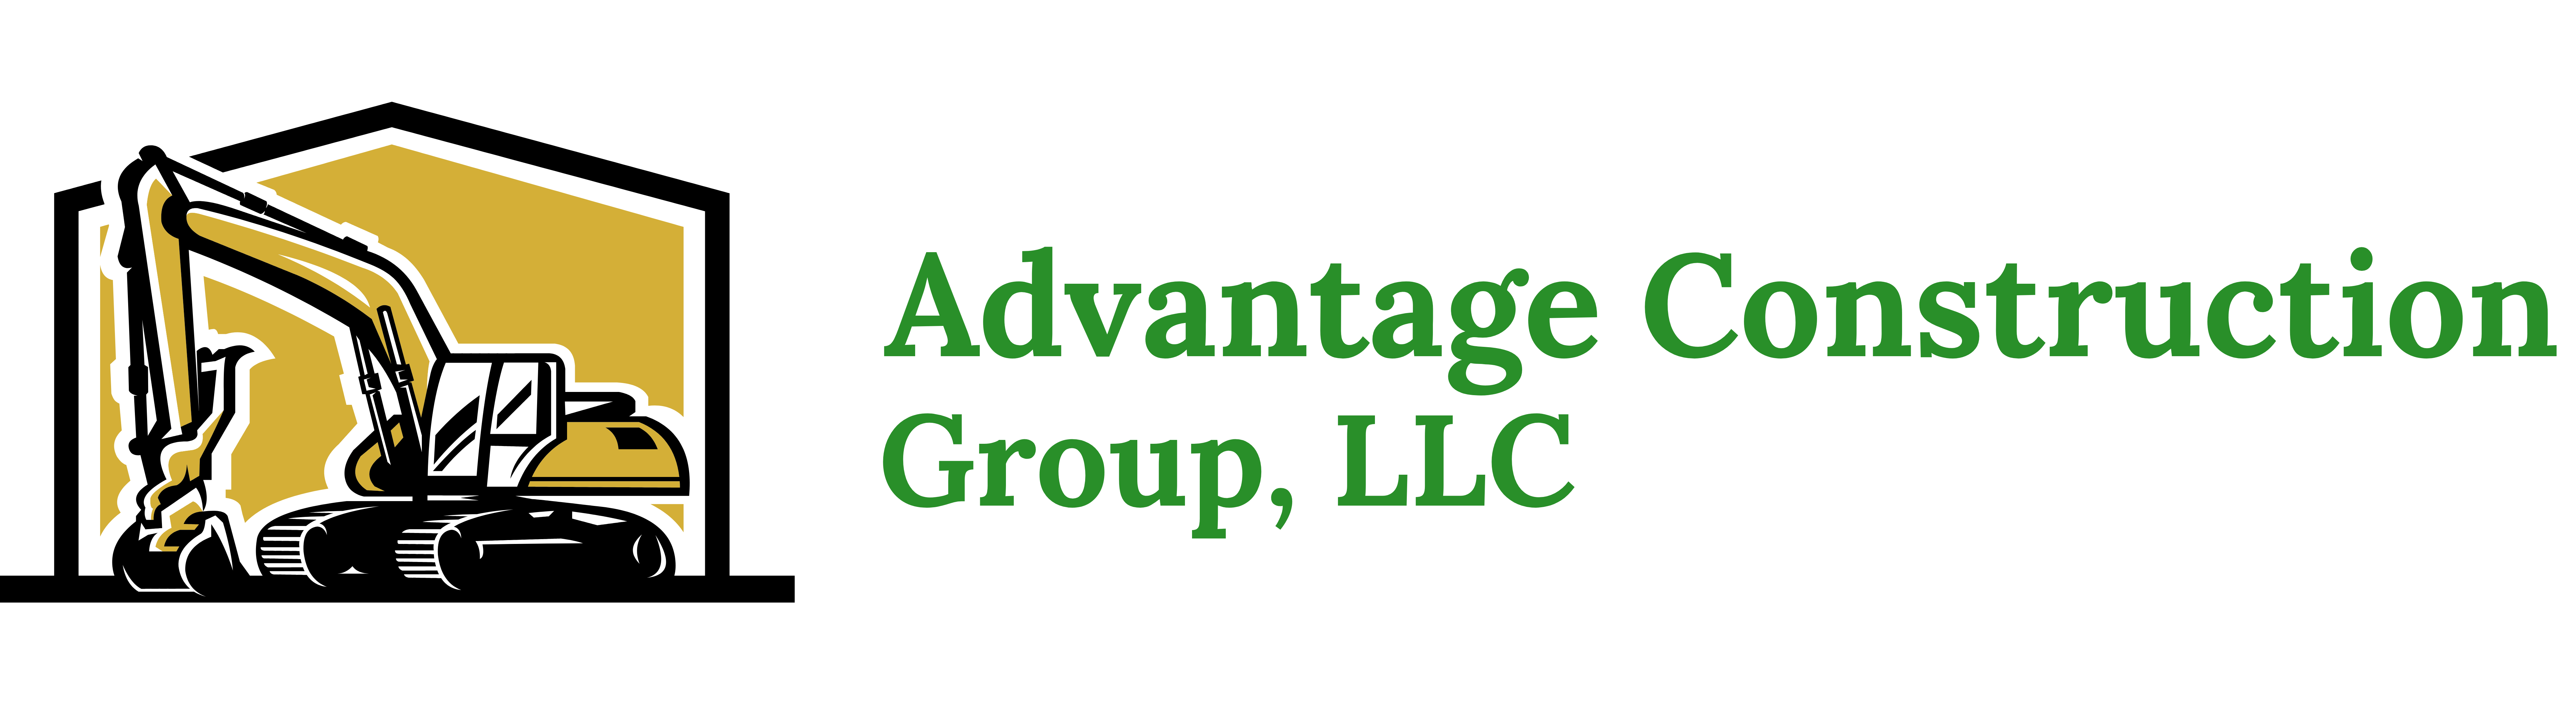 Advantage Construction Group, LLC